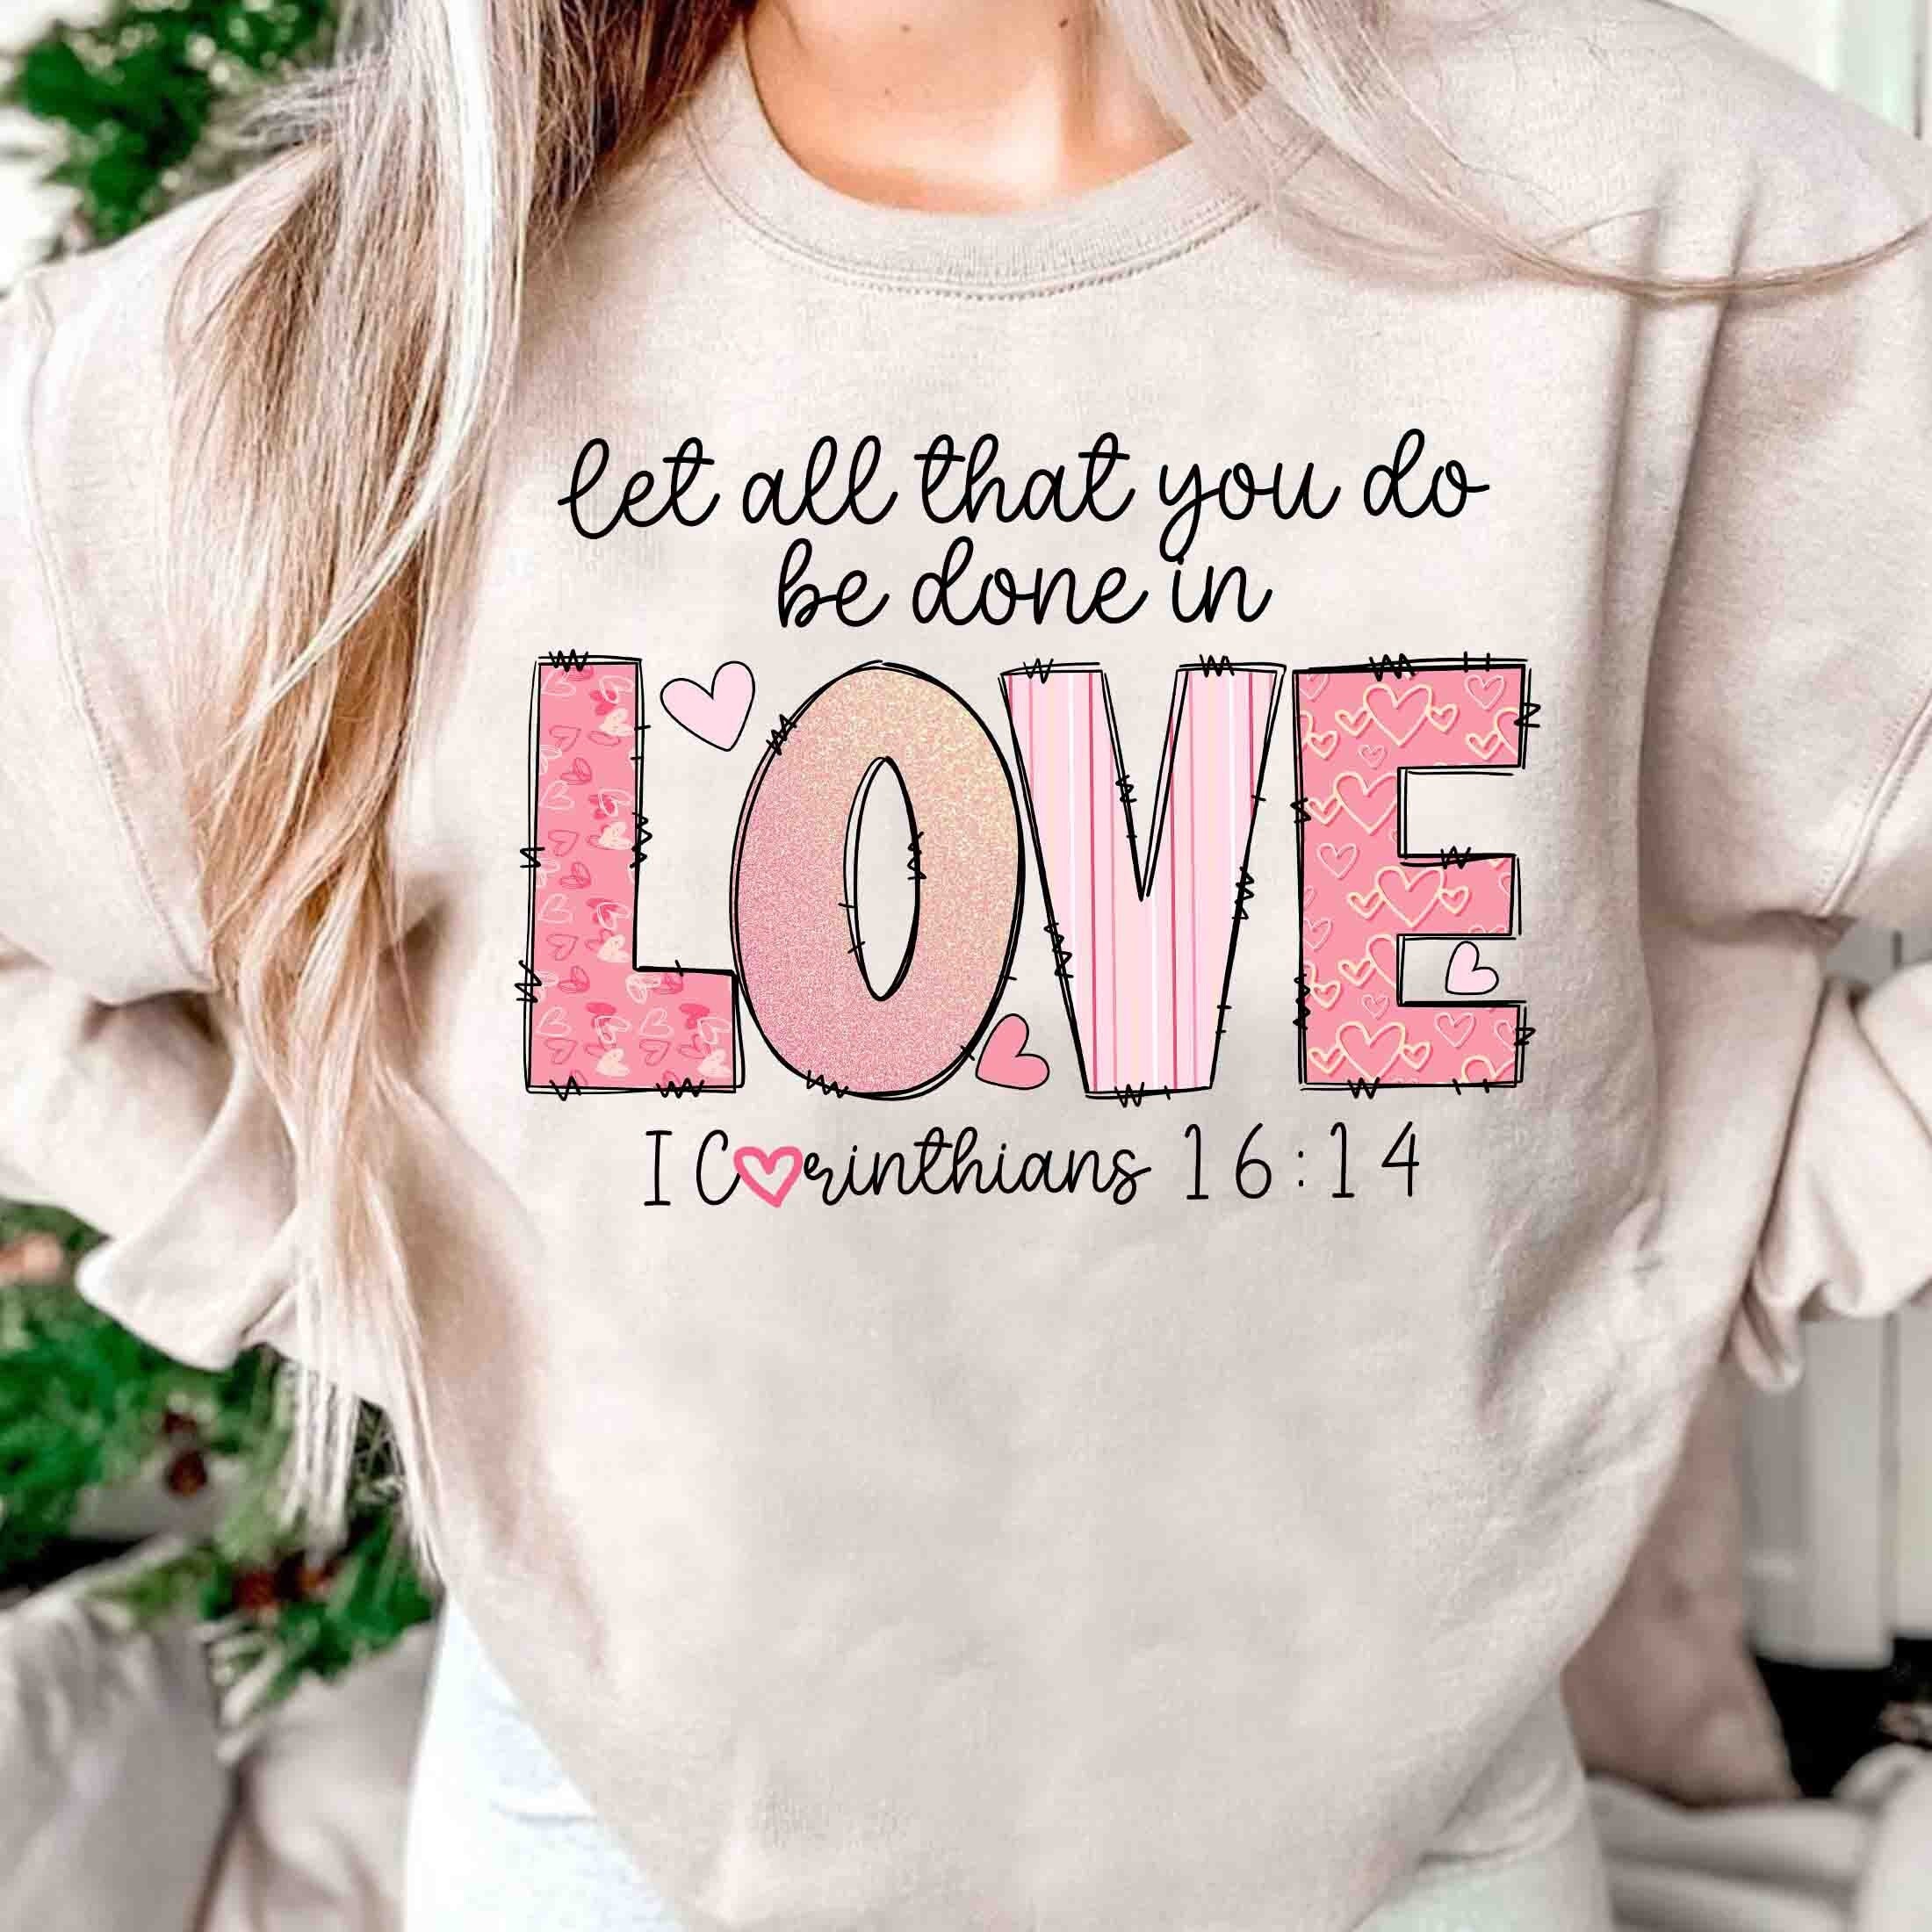 1 Corinthians 13:4 Love Bible Verse Coloring Pages for Kids